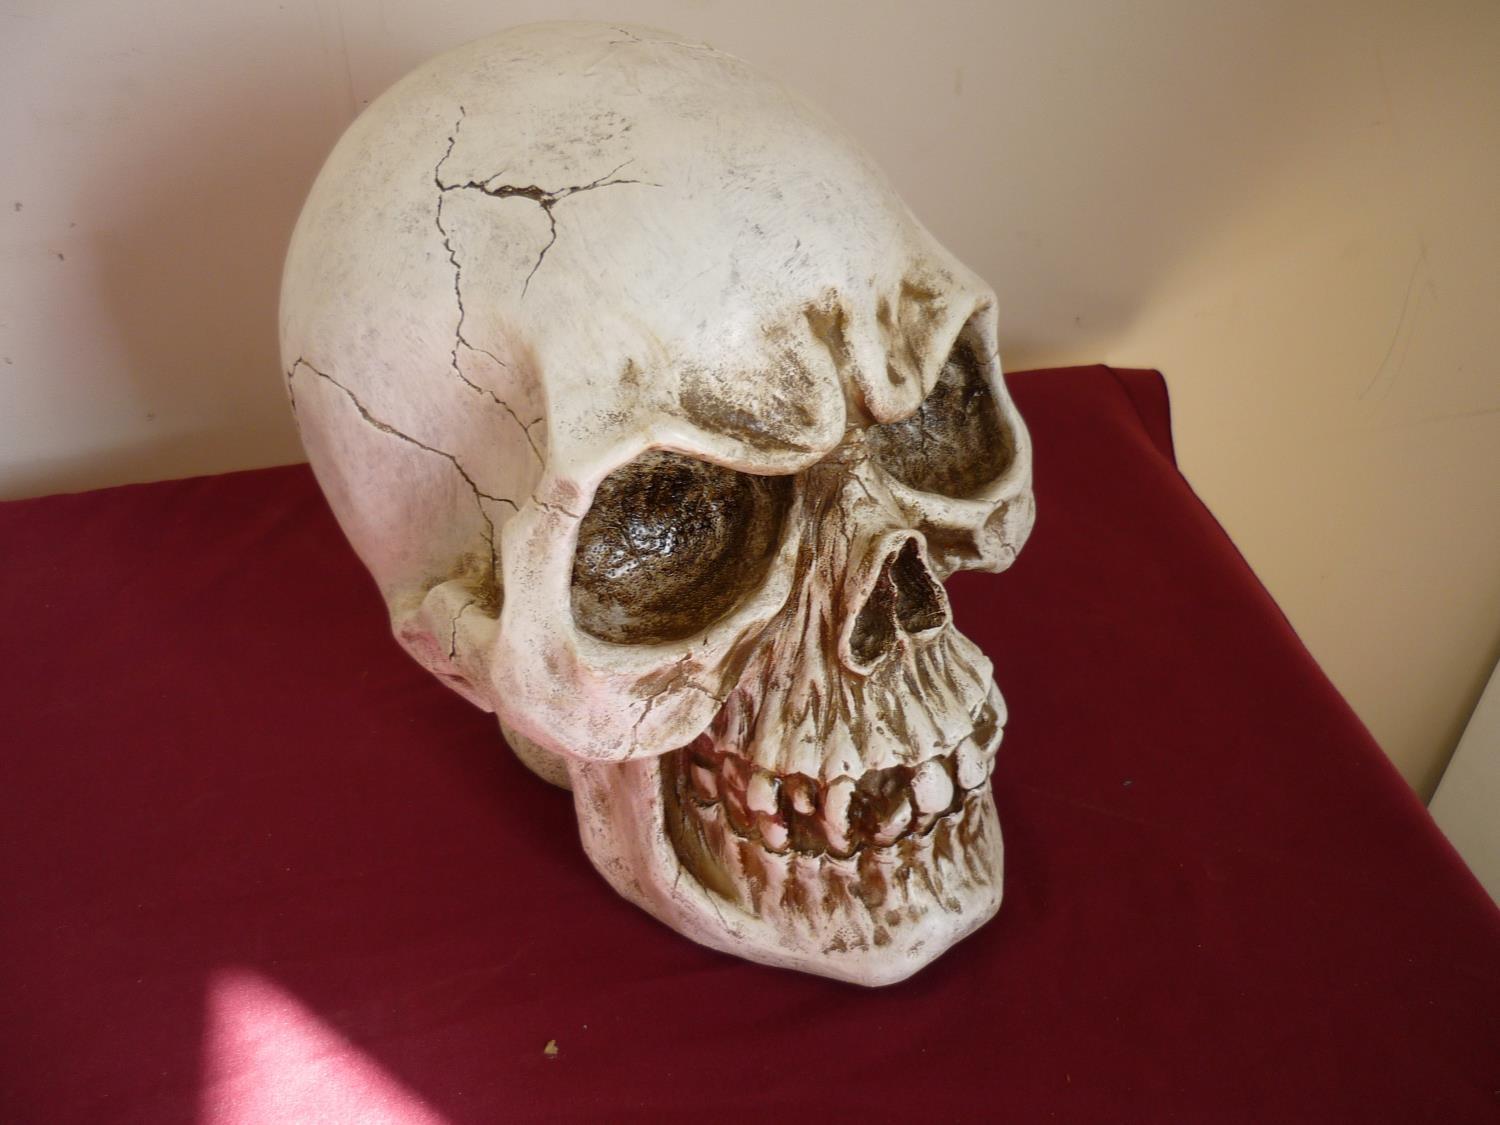 Extremely large resin skull (28cm high)